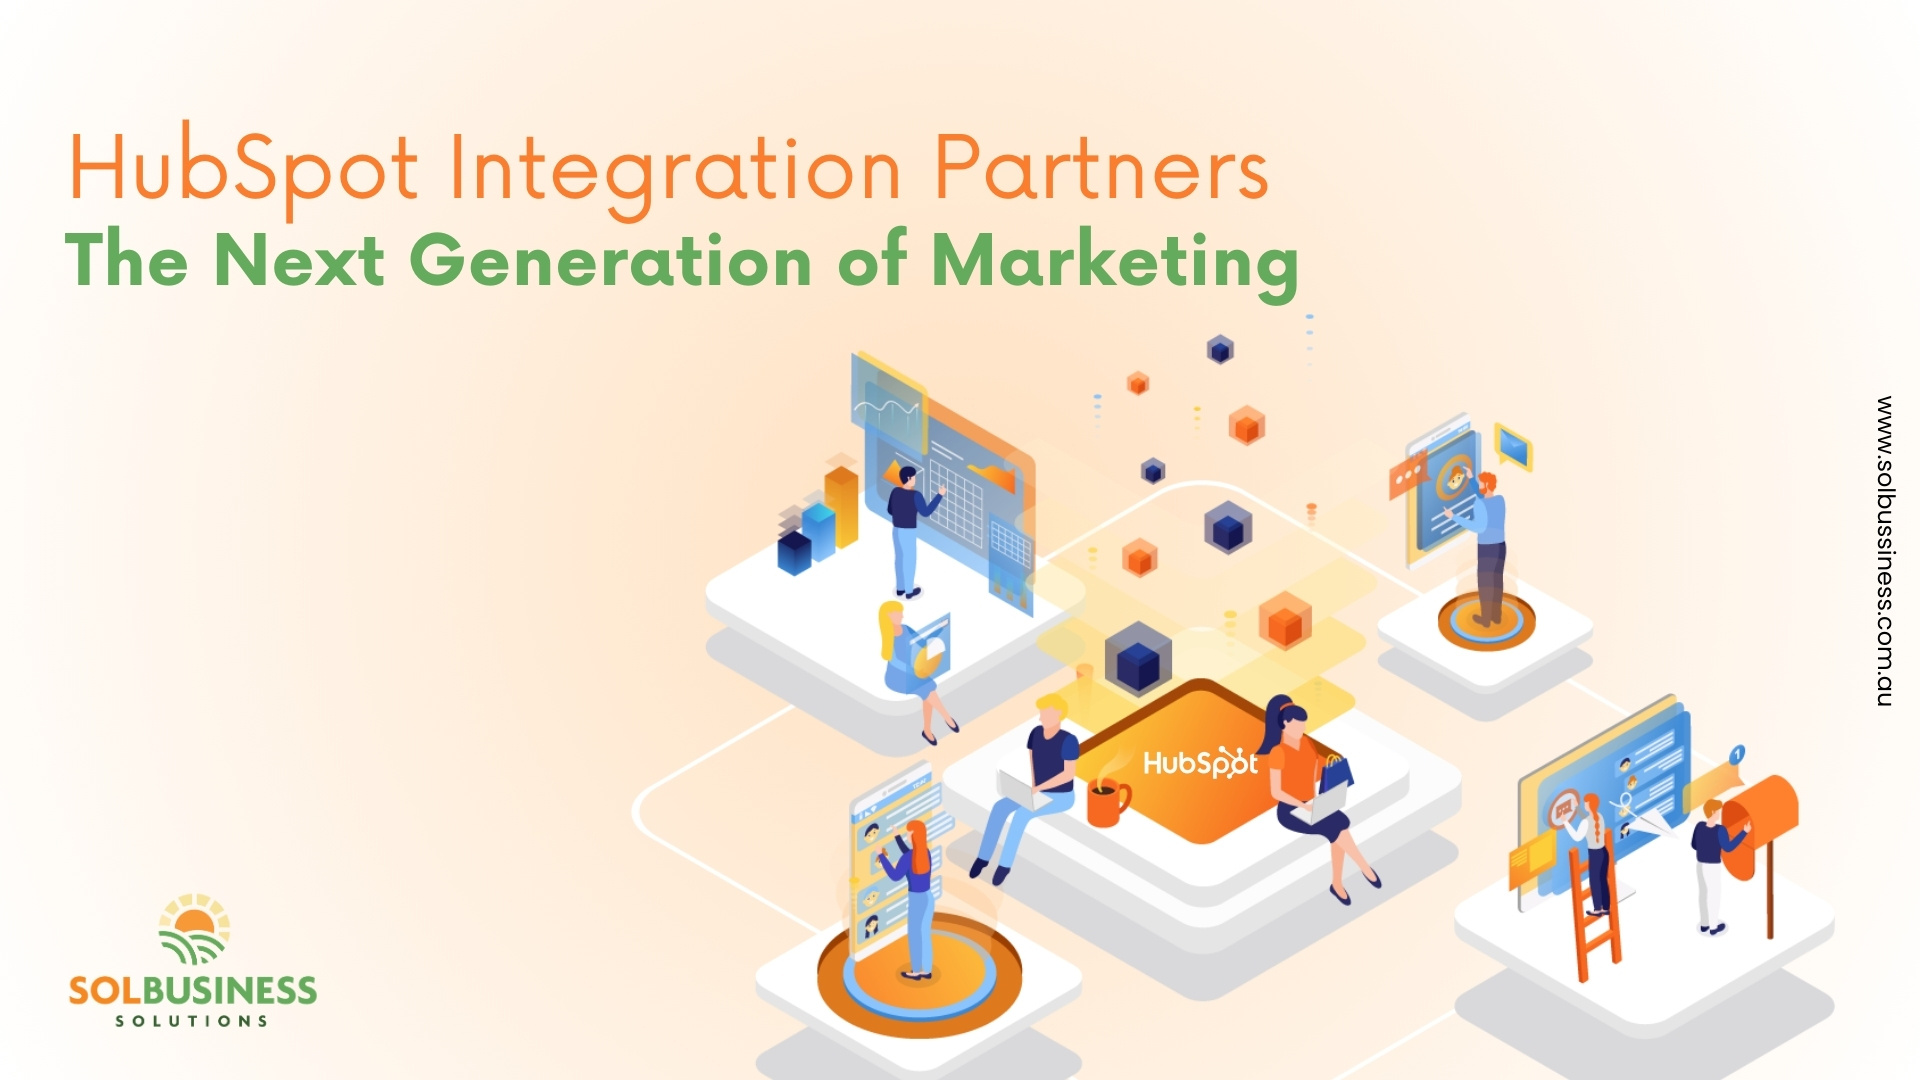  HubSpot Integration Partners